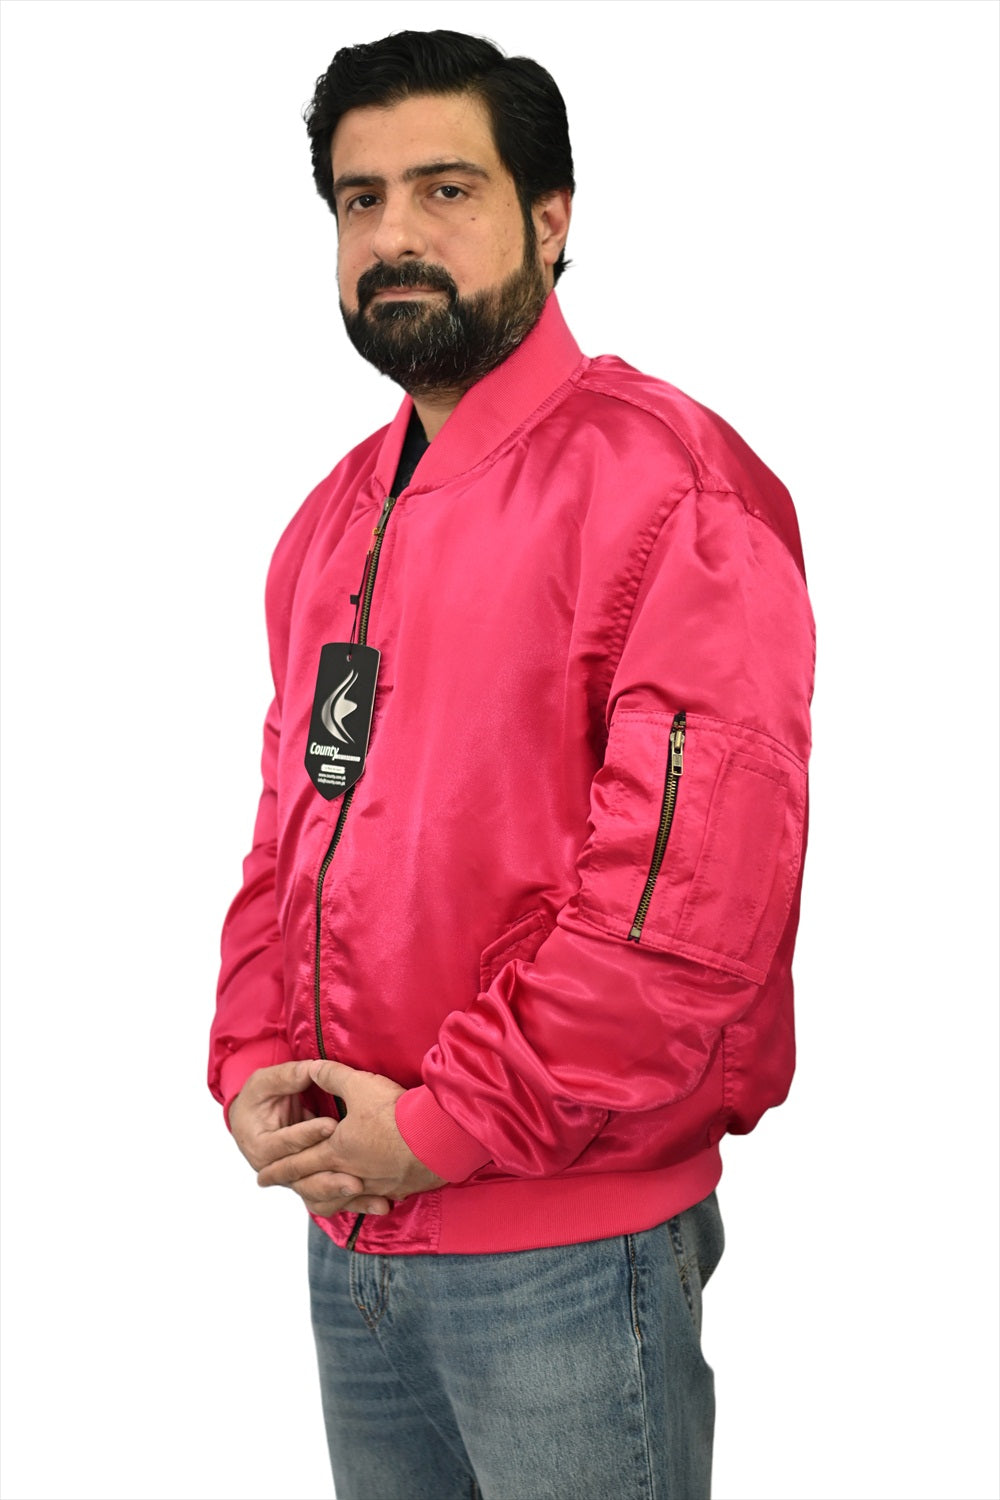 Letterman College Varsity Bomber Satin Jackets Quality Jacket Sports Wear Hot Pink Satin